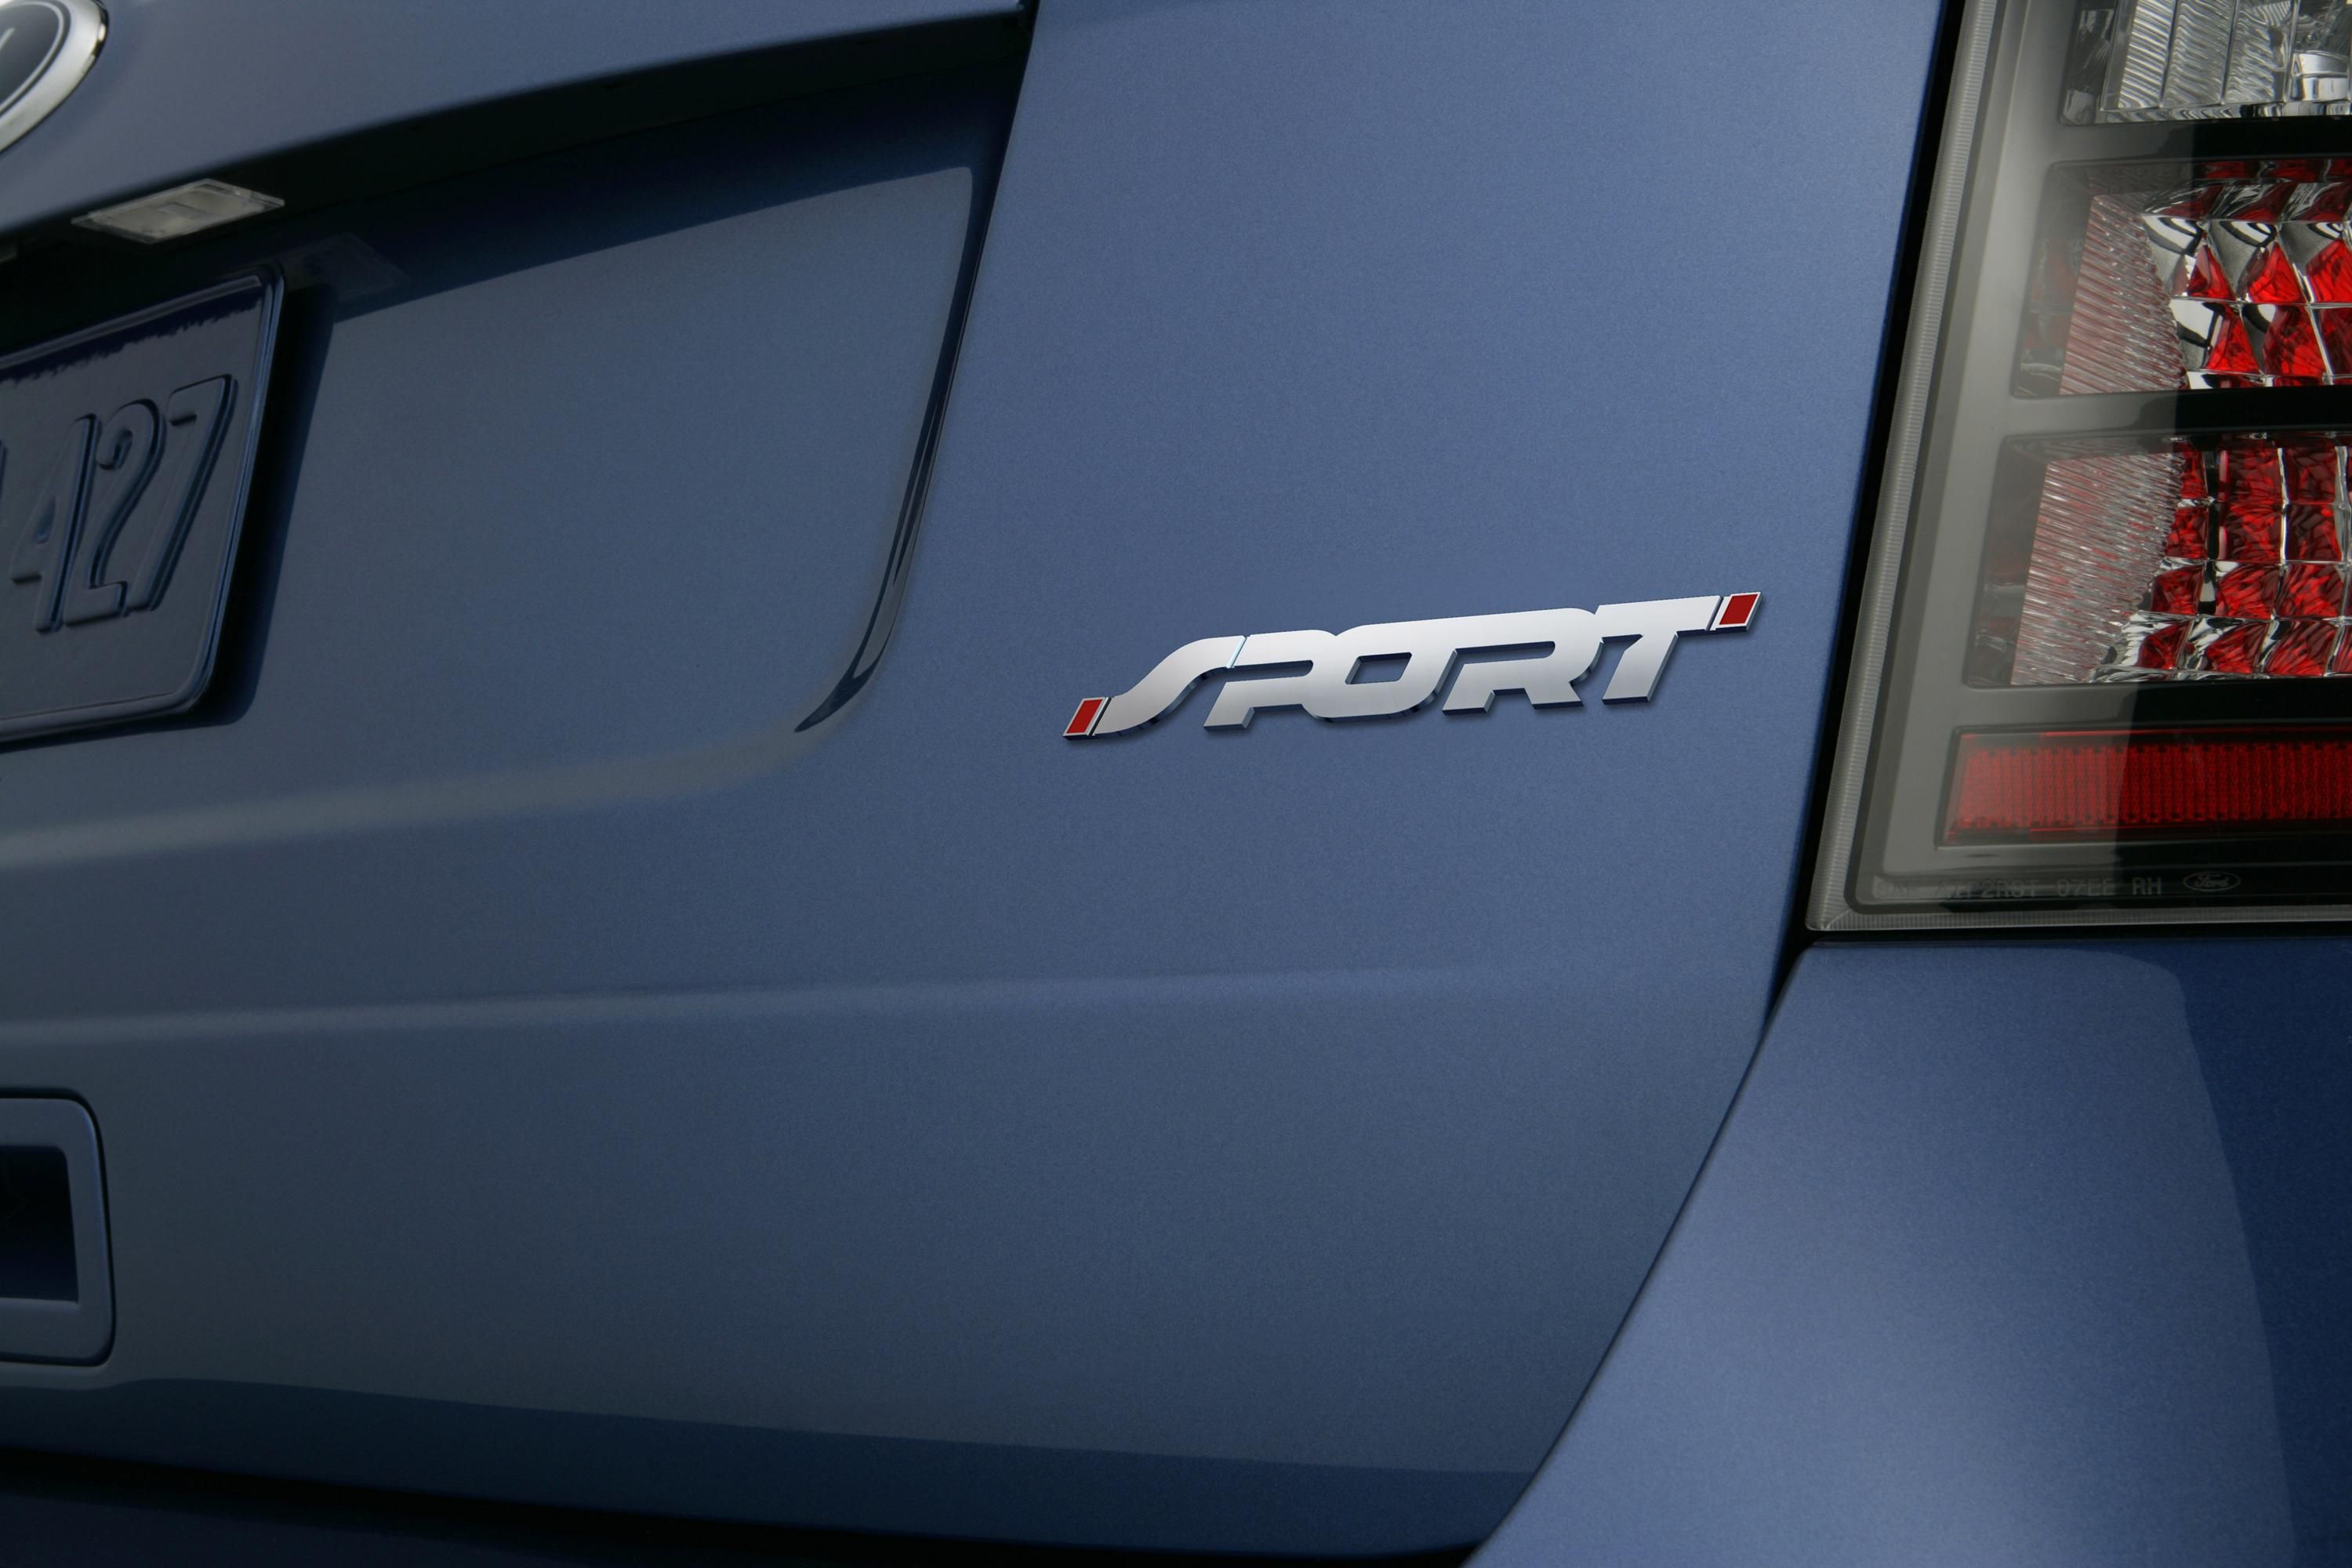 2009 Ford Edge Sport